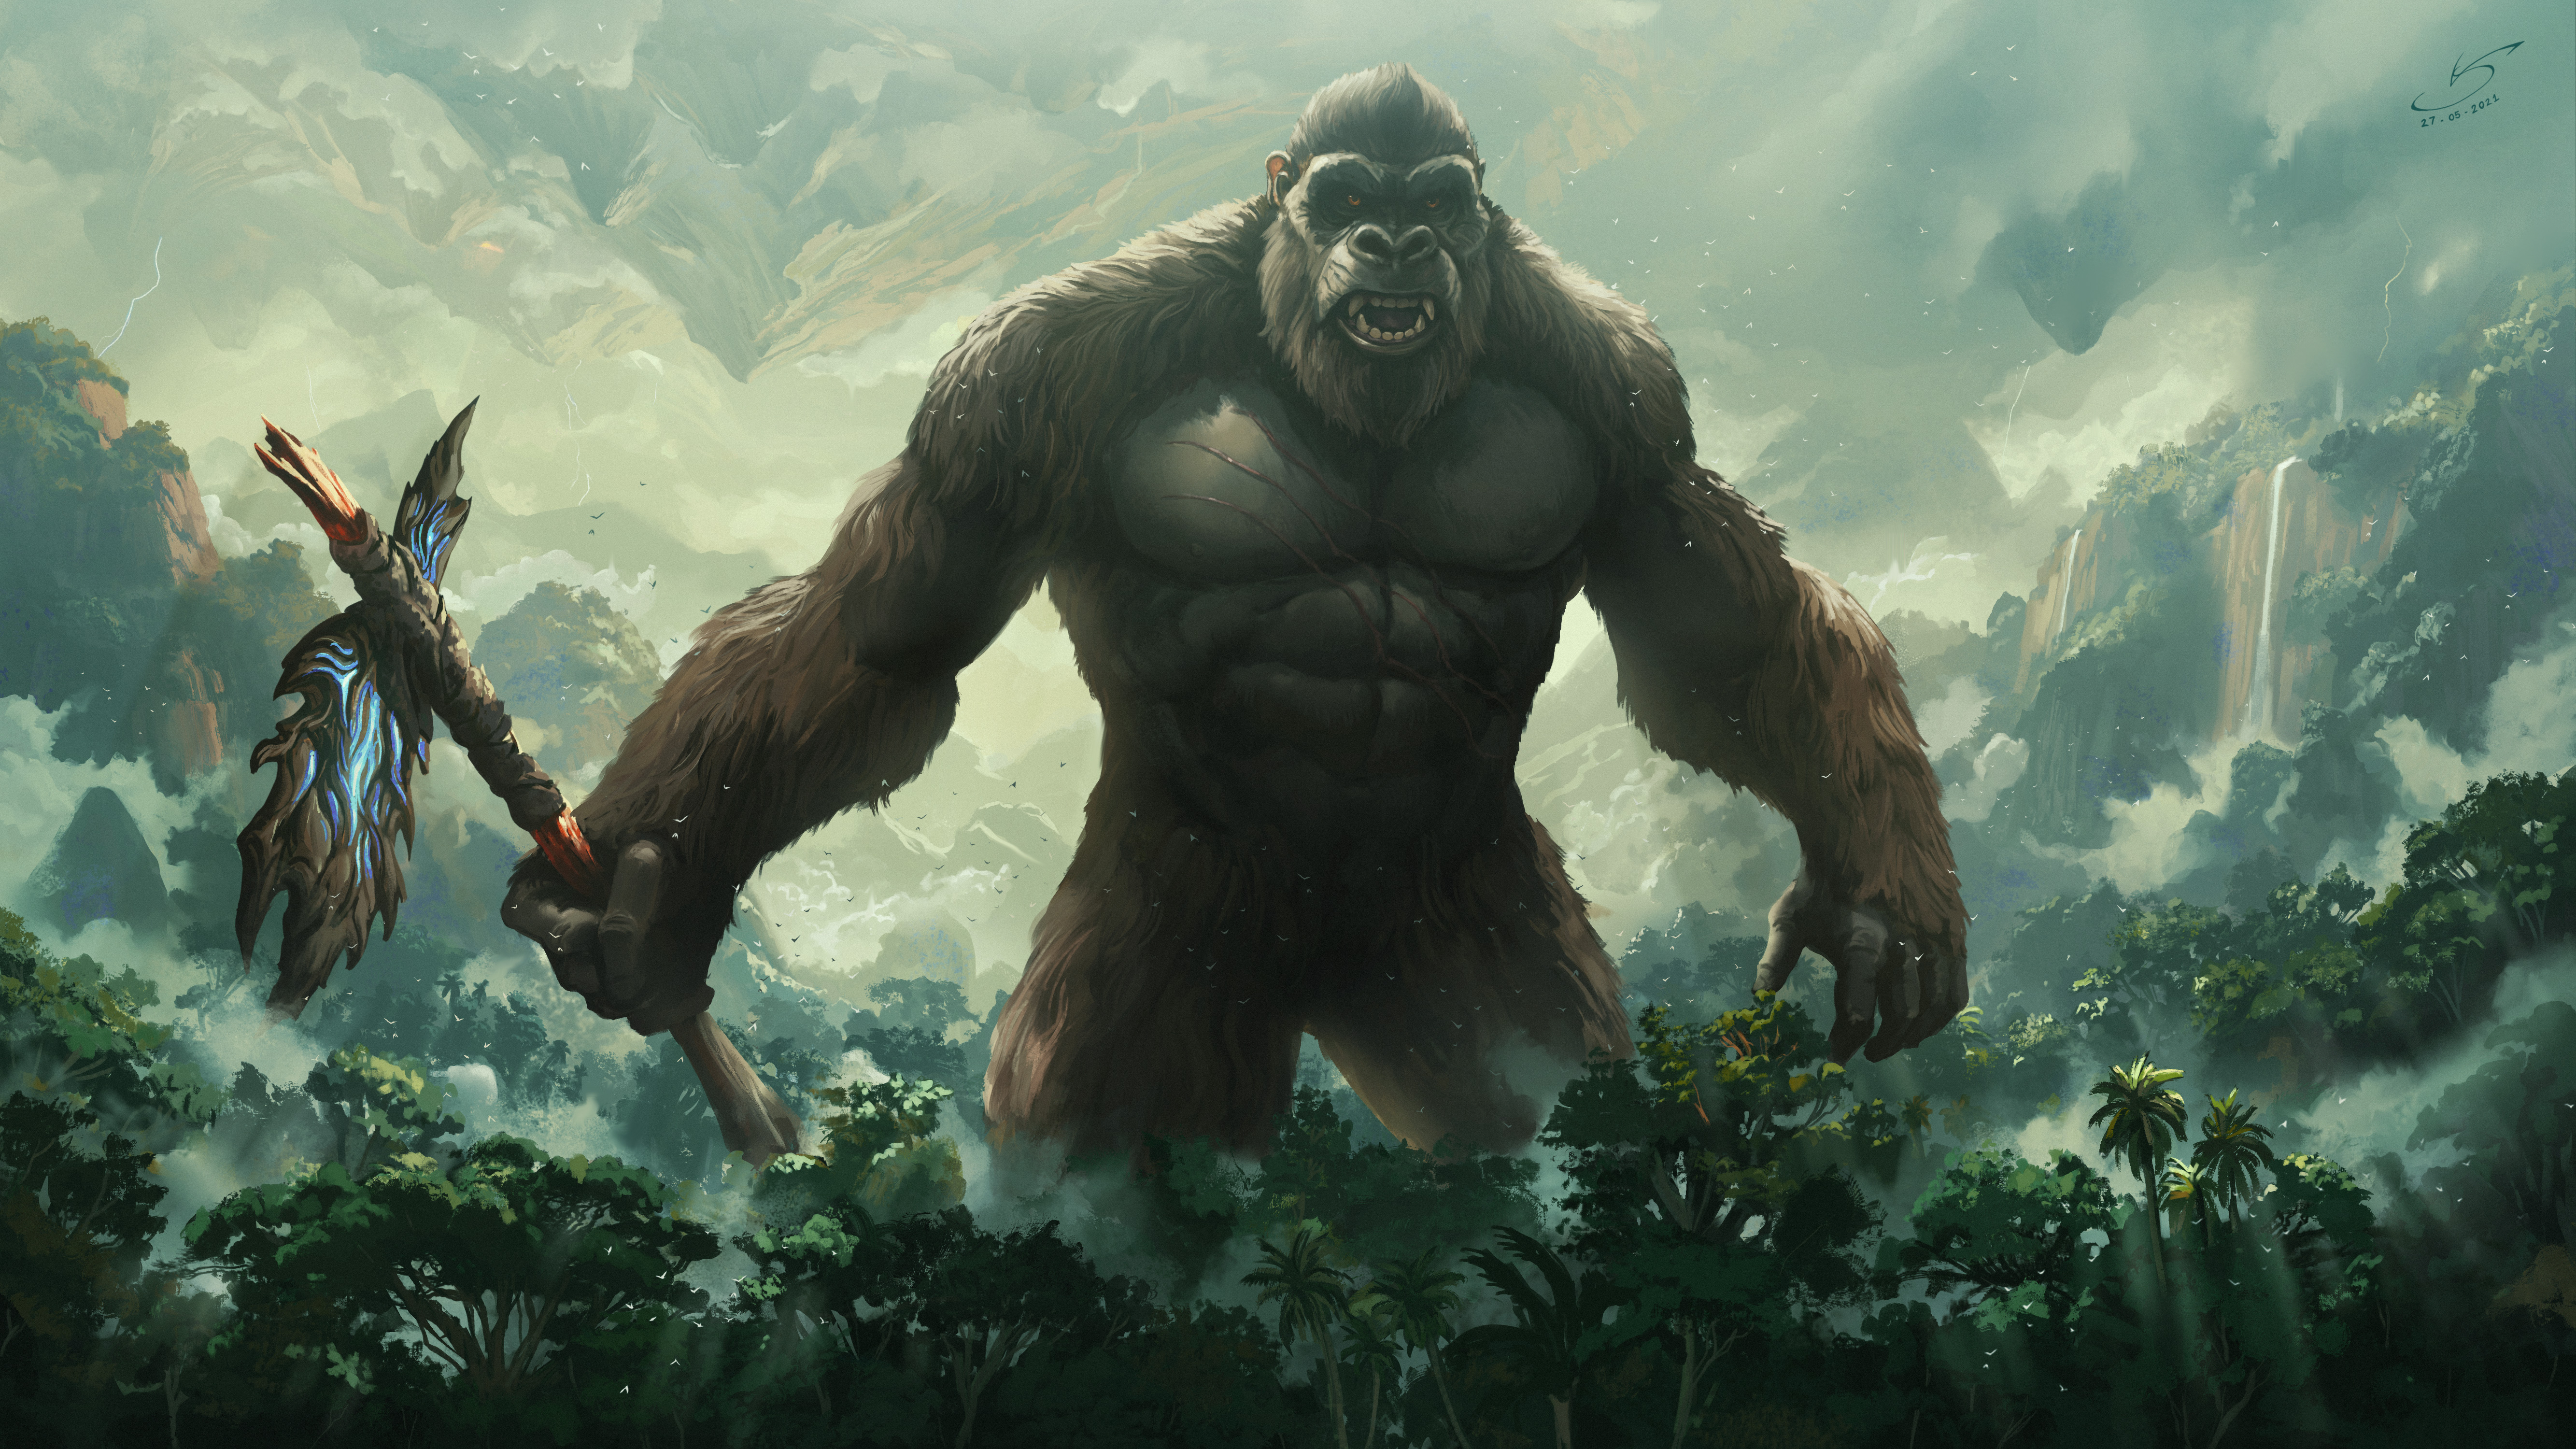 King Kong HD Wallpapers | 4K Backgrounds - Wallpapers Den